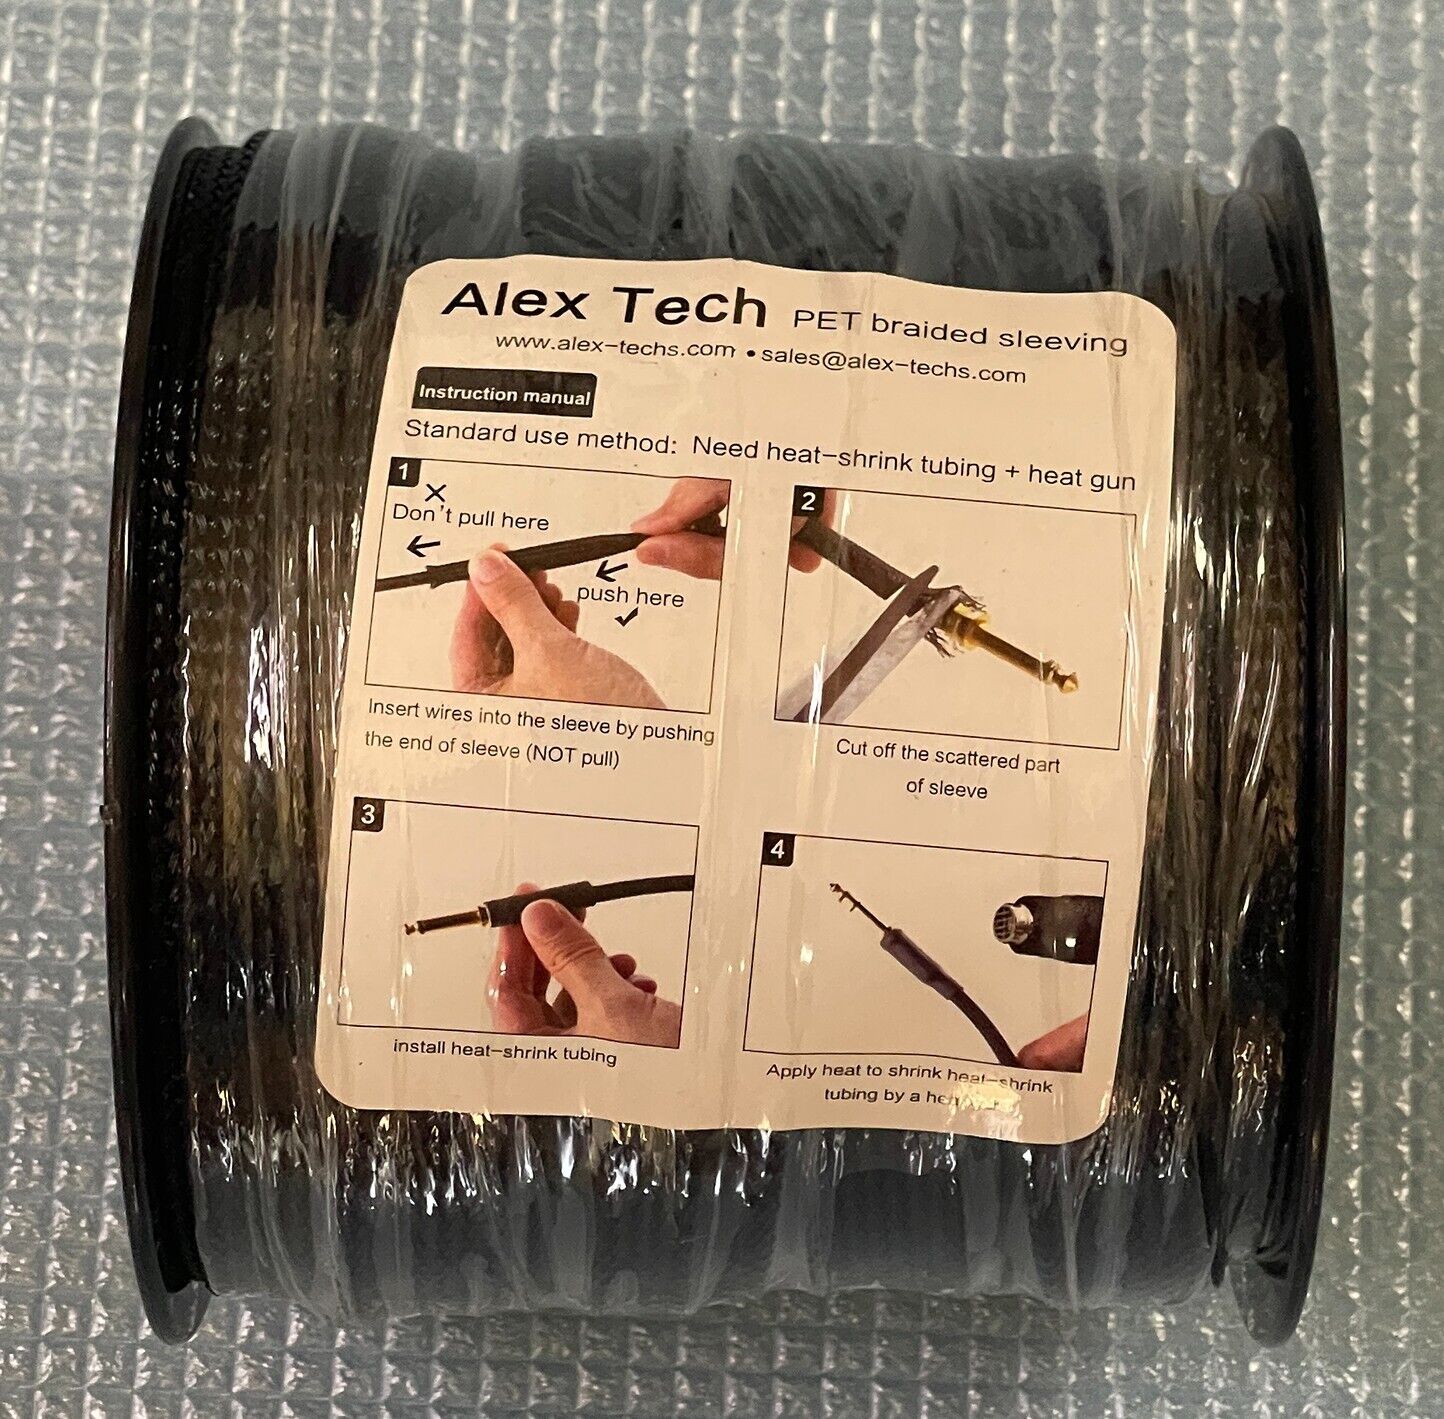 New 5 Packs Alex Tech Pet Braided Sleeving Alex Tech 100ft Black Sleeving 3/4